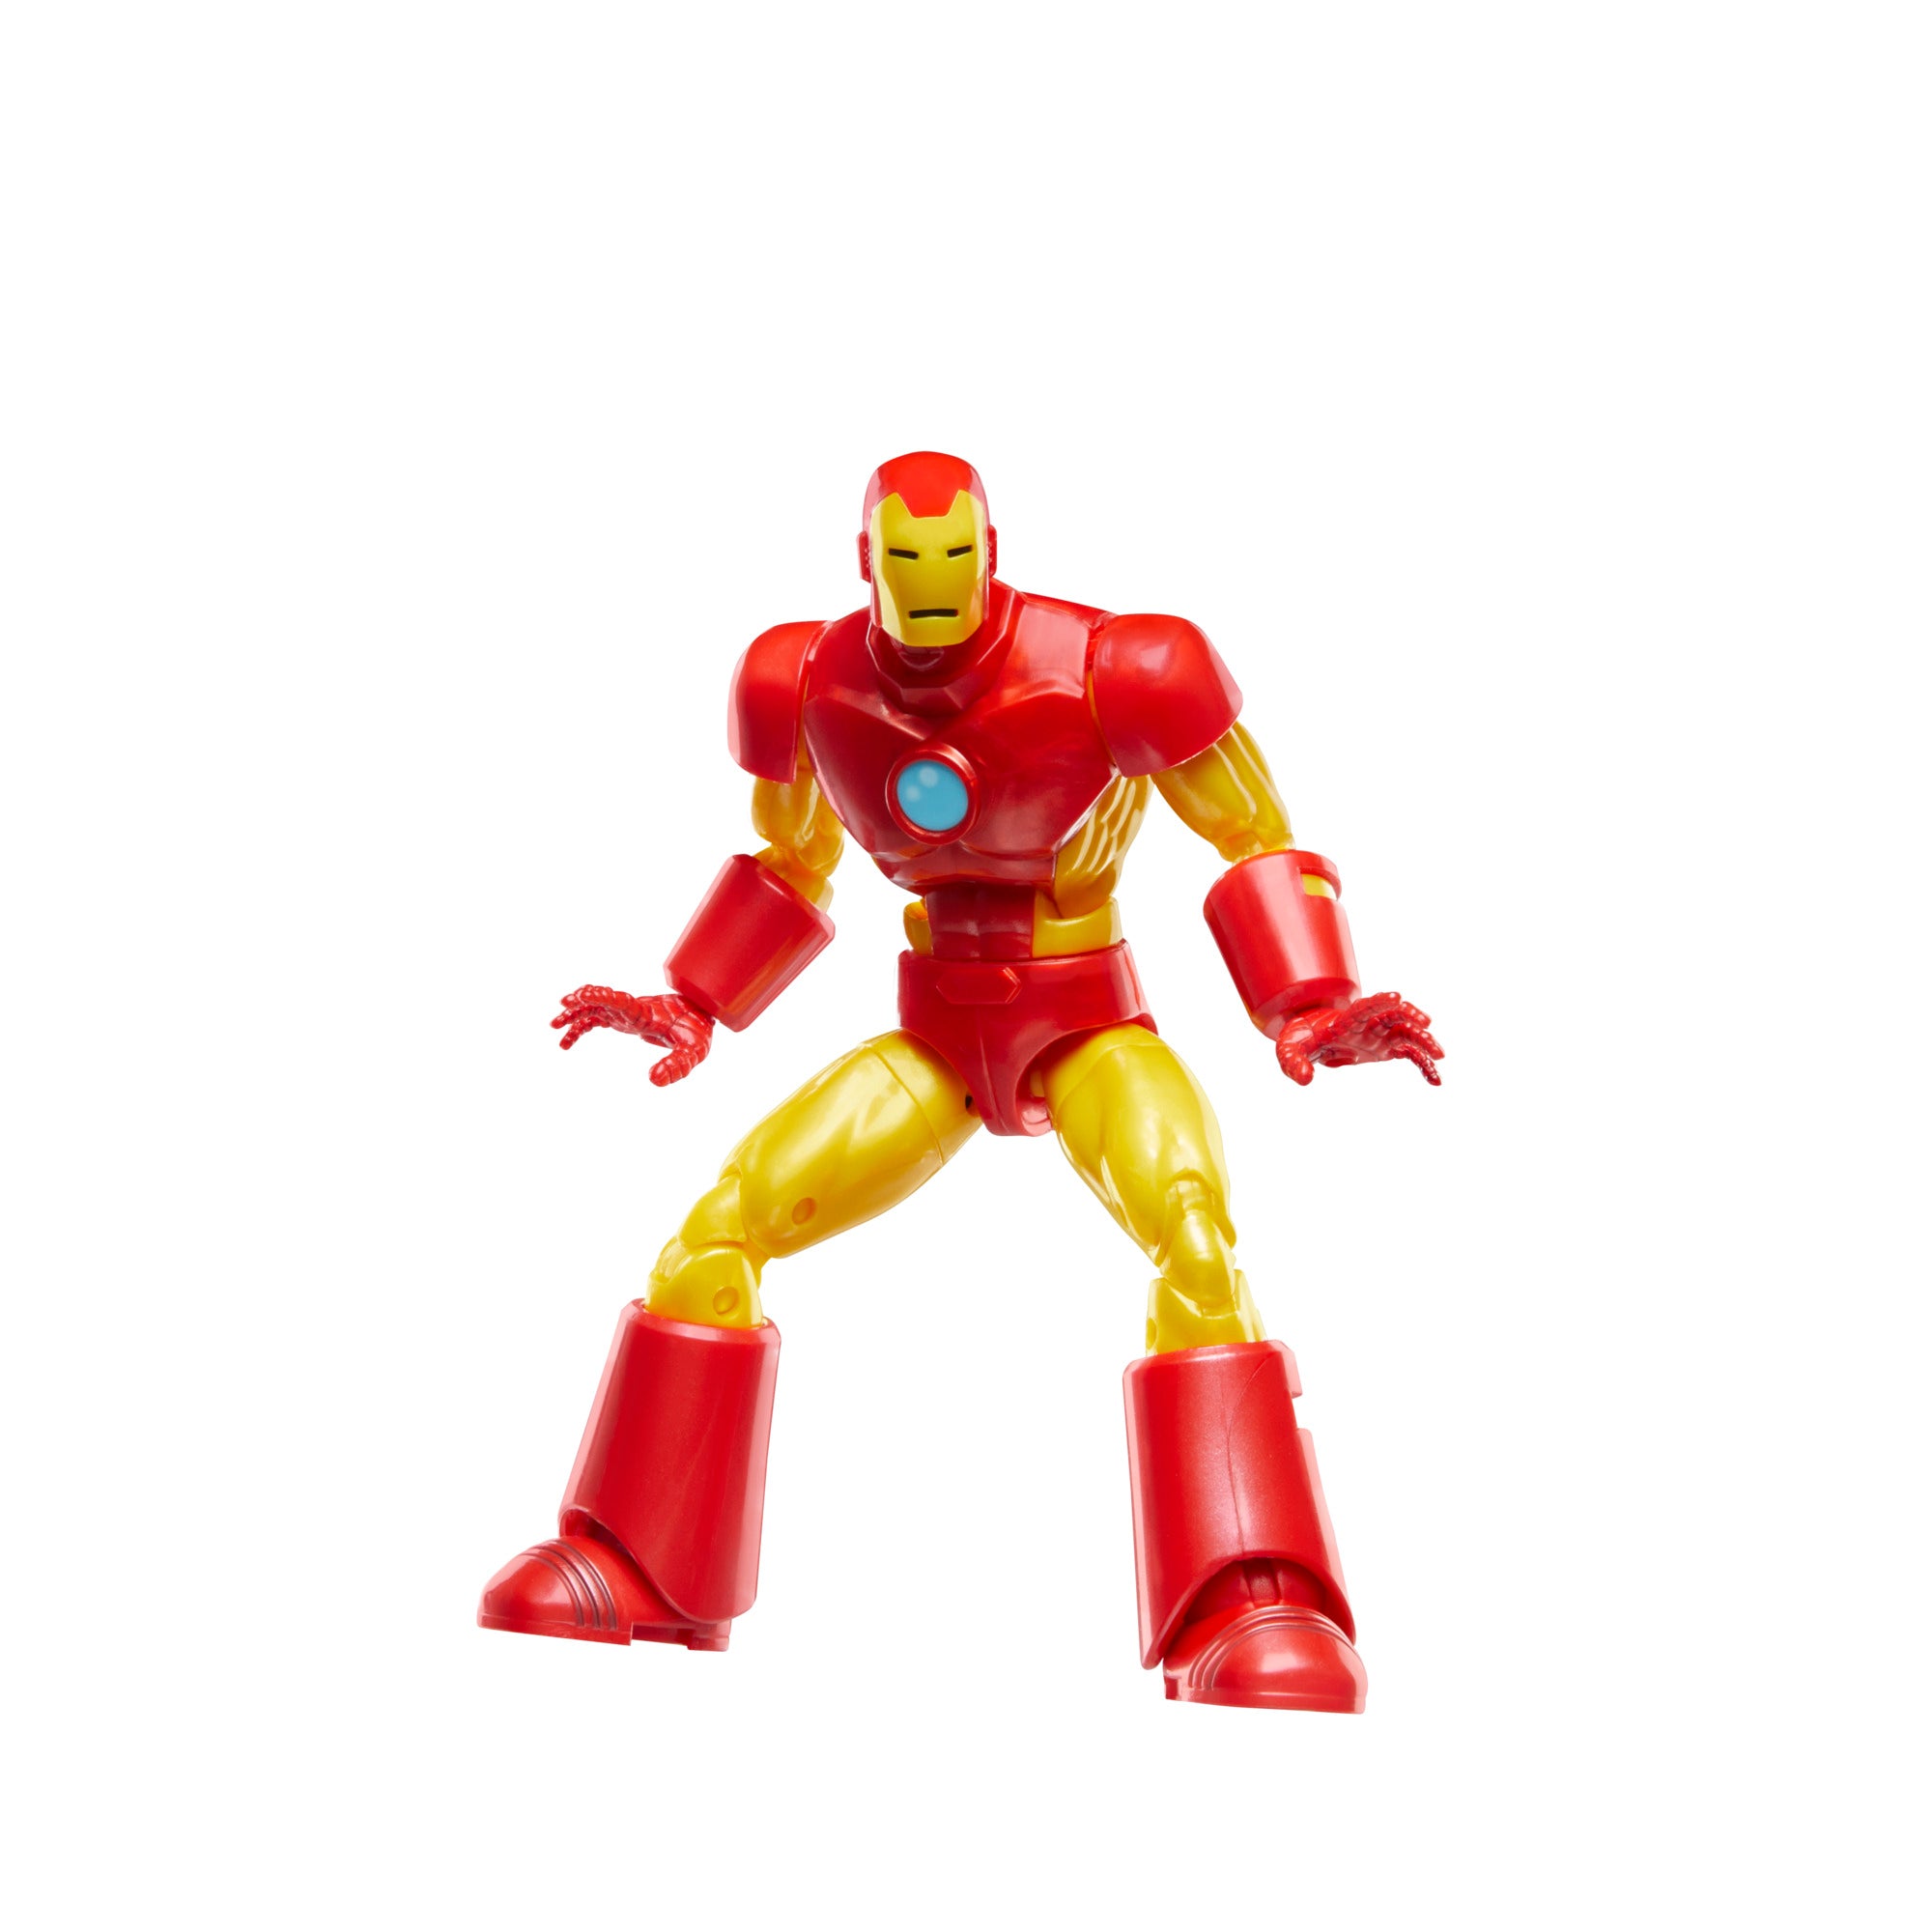 Marvel Legends Classic: Iron Man - Iron Man Modelo 09